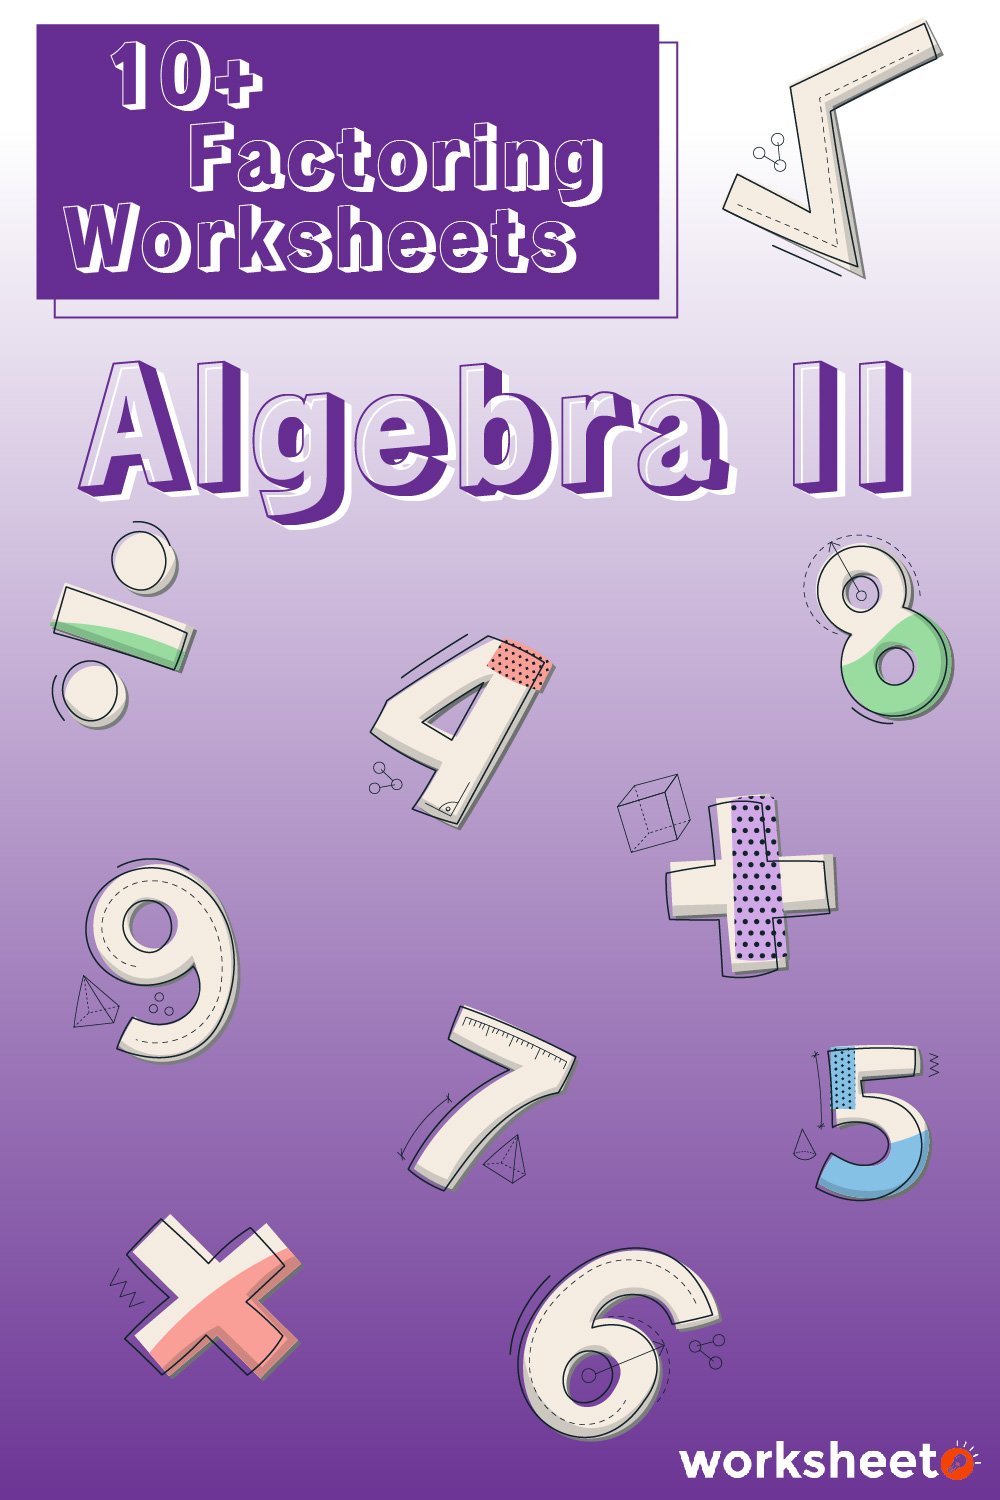 16 Images of Factoring Worksheets Algebra II